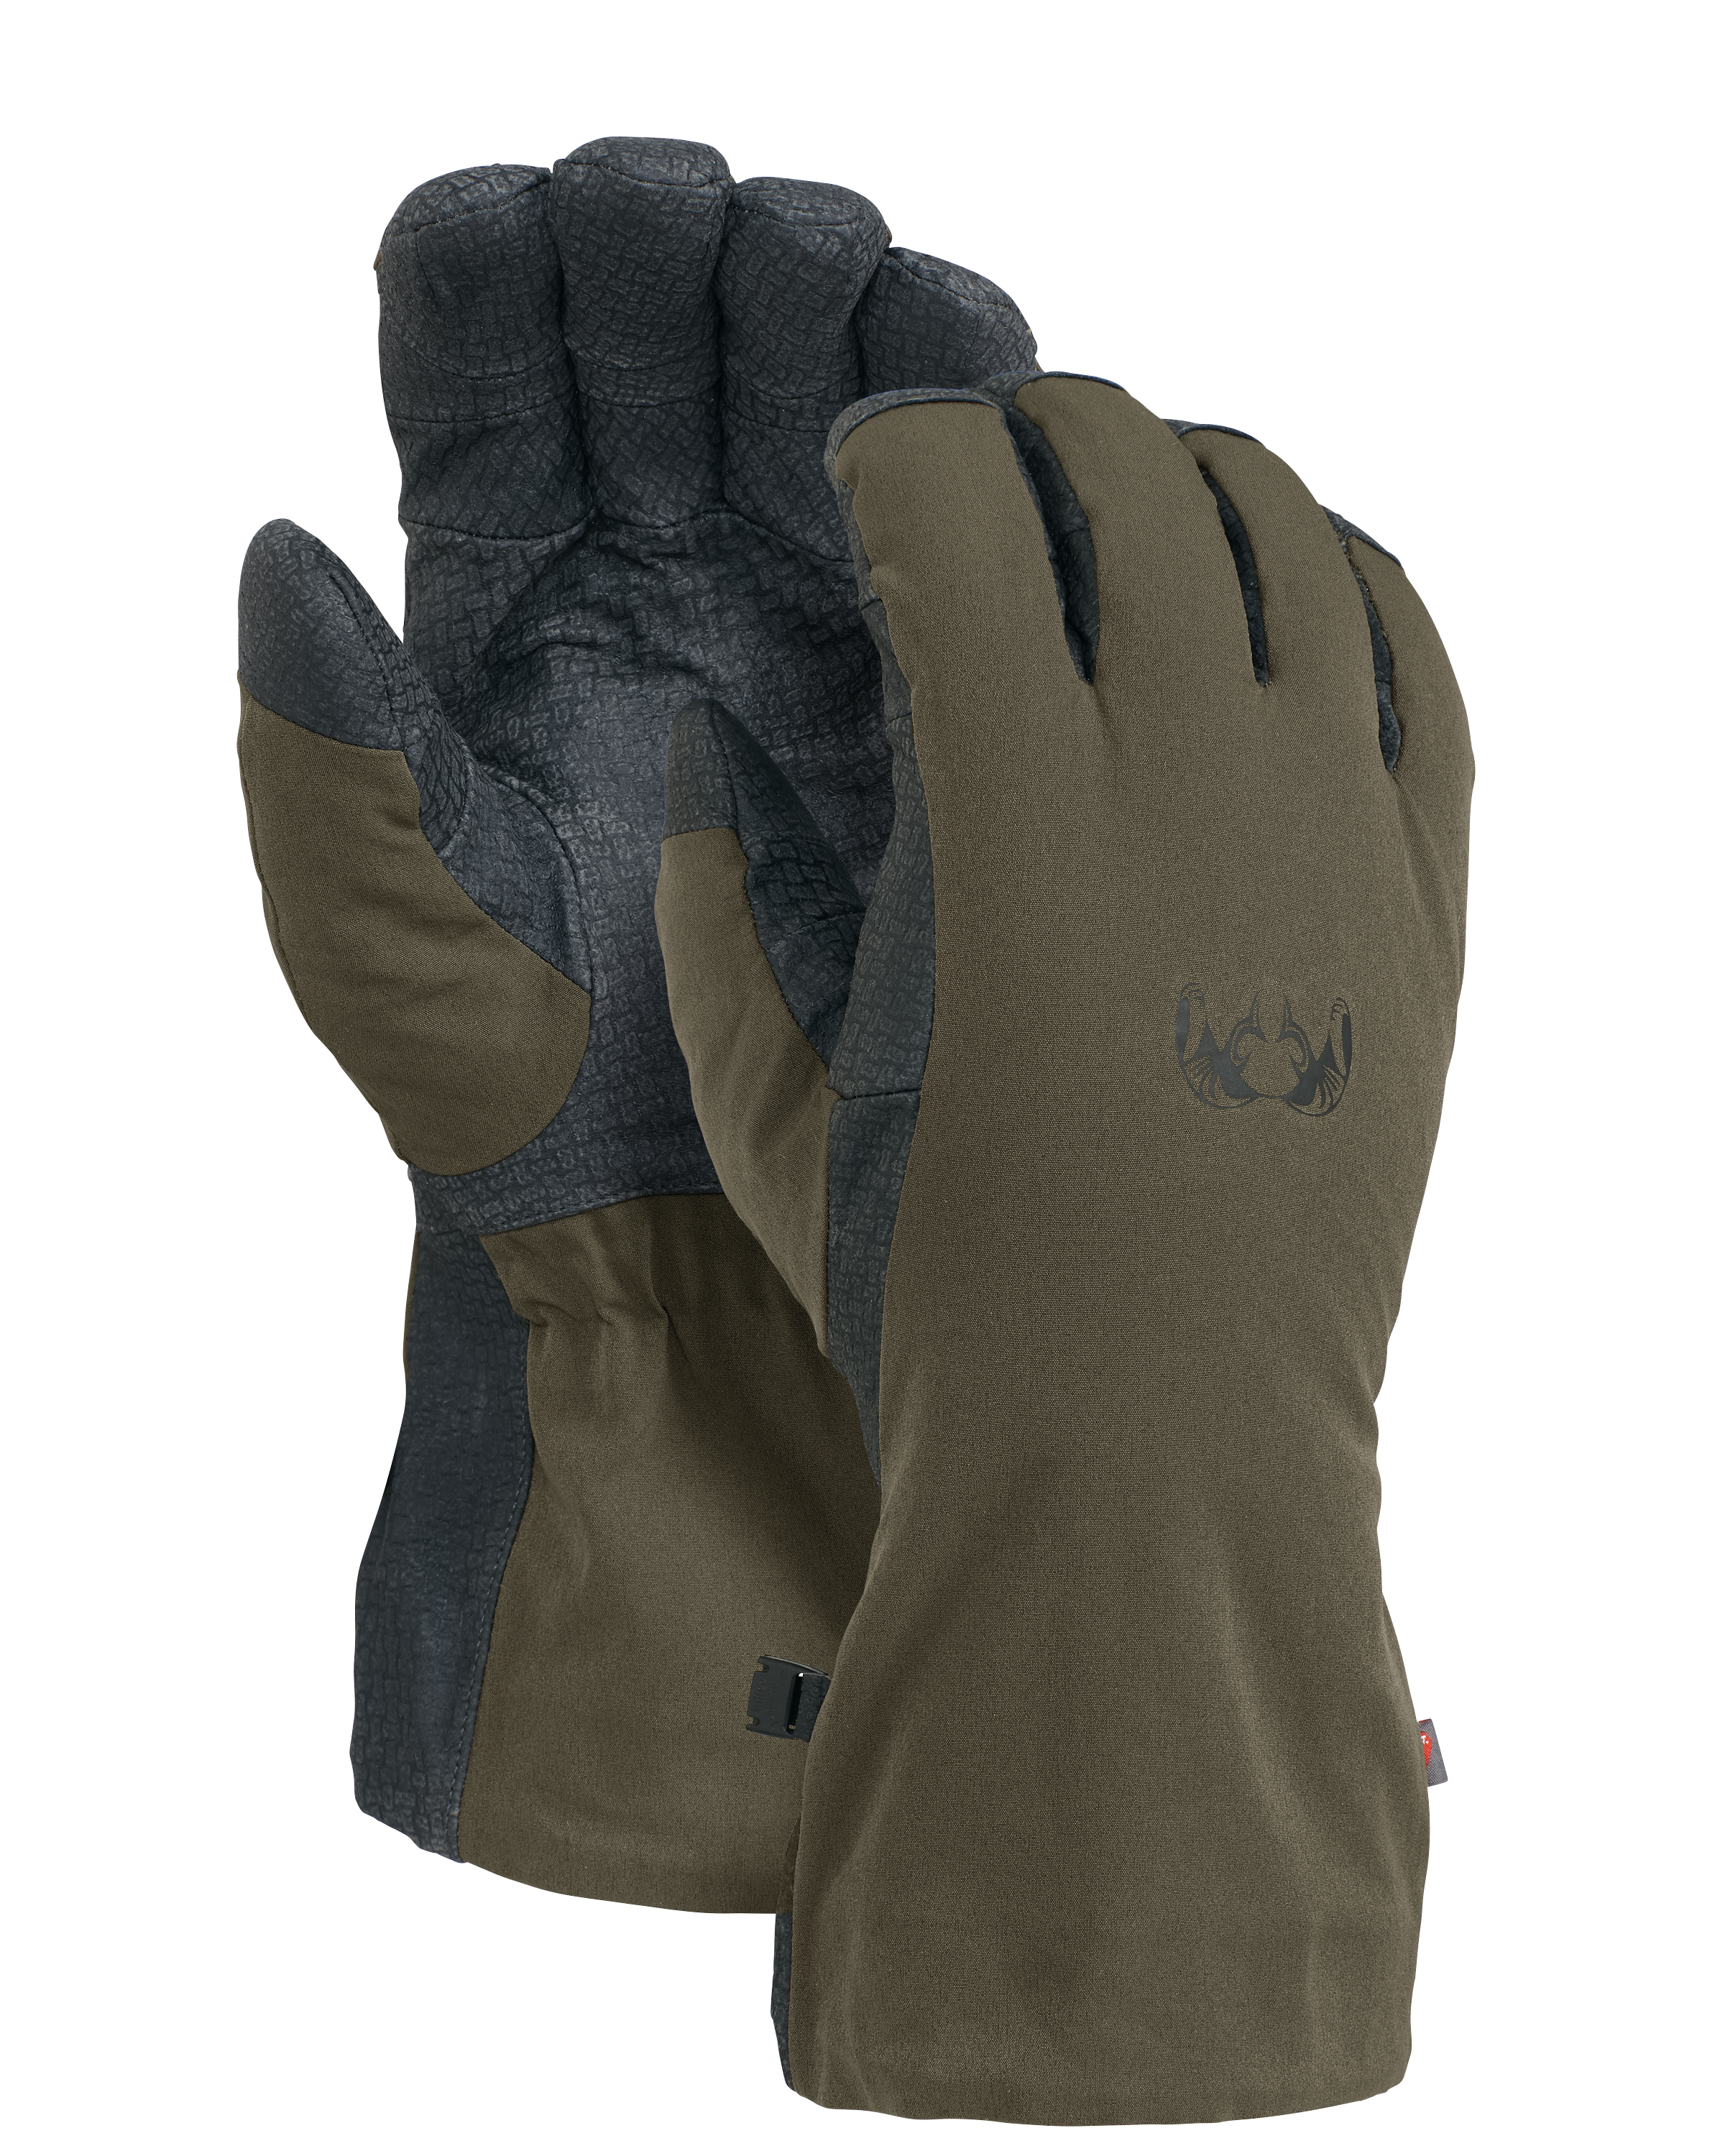 KUIU Northstar Hunting Glove in Ash | Size XL